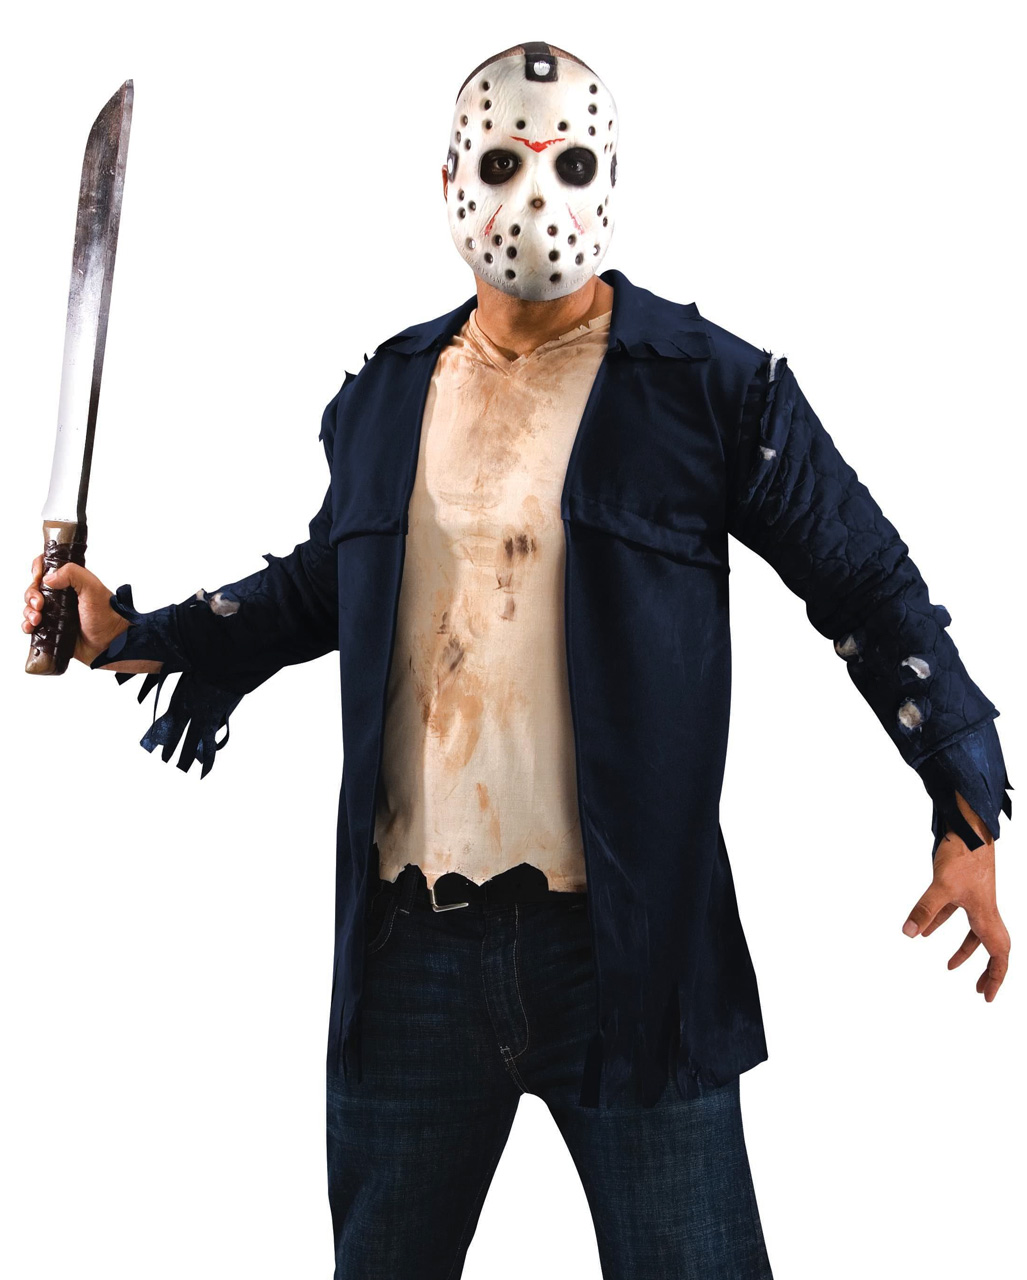 2 JASON VOORHEES HOCKEY MASKS Friday 13th Halloween Scary Killer Horror Costume 